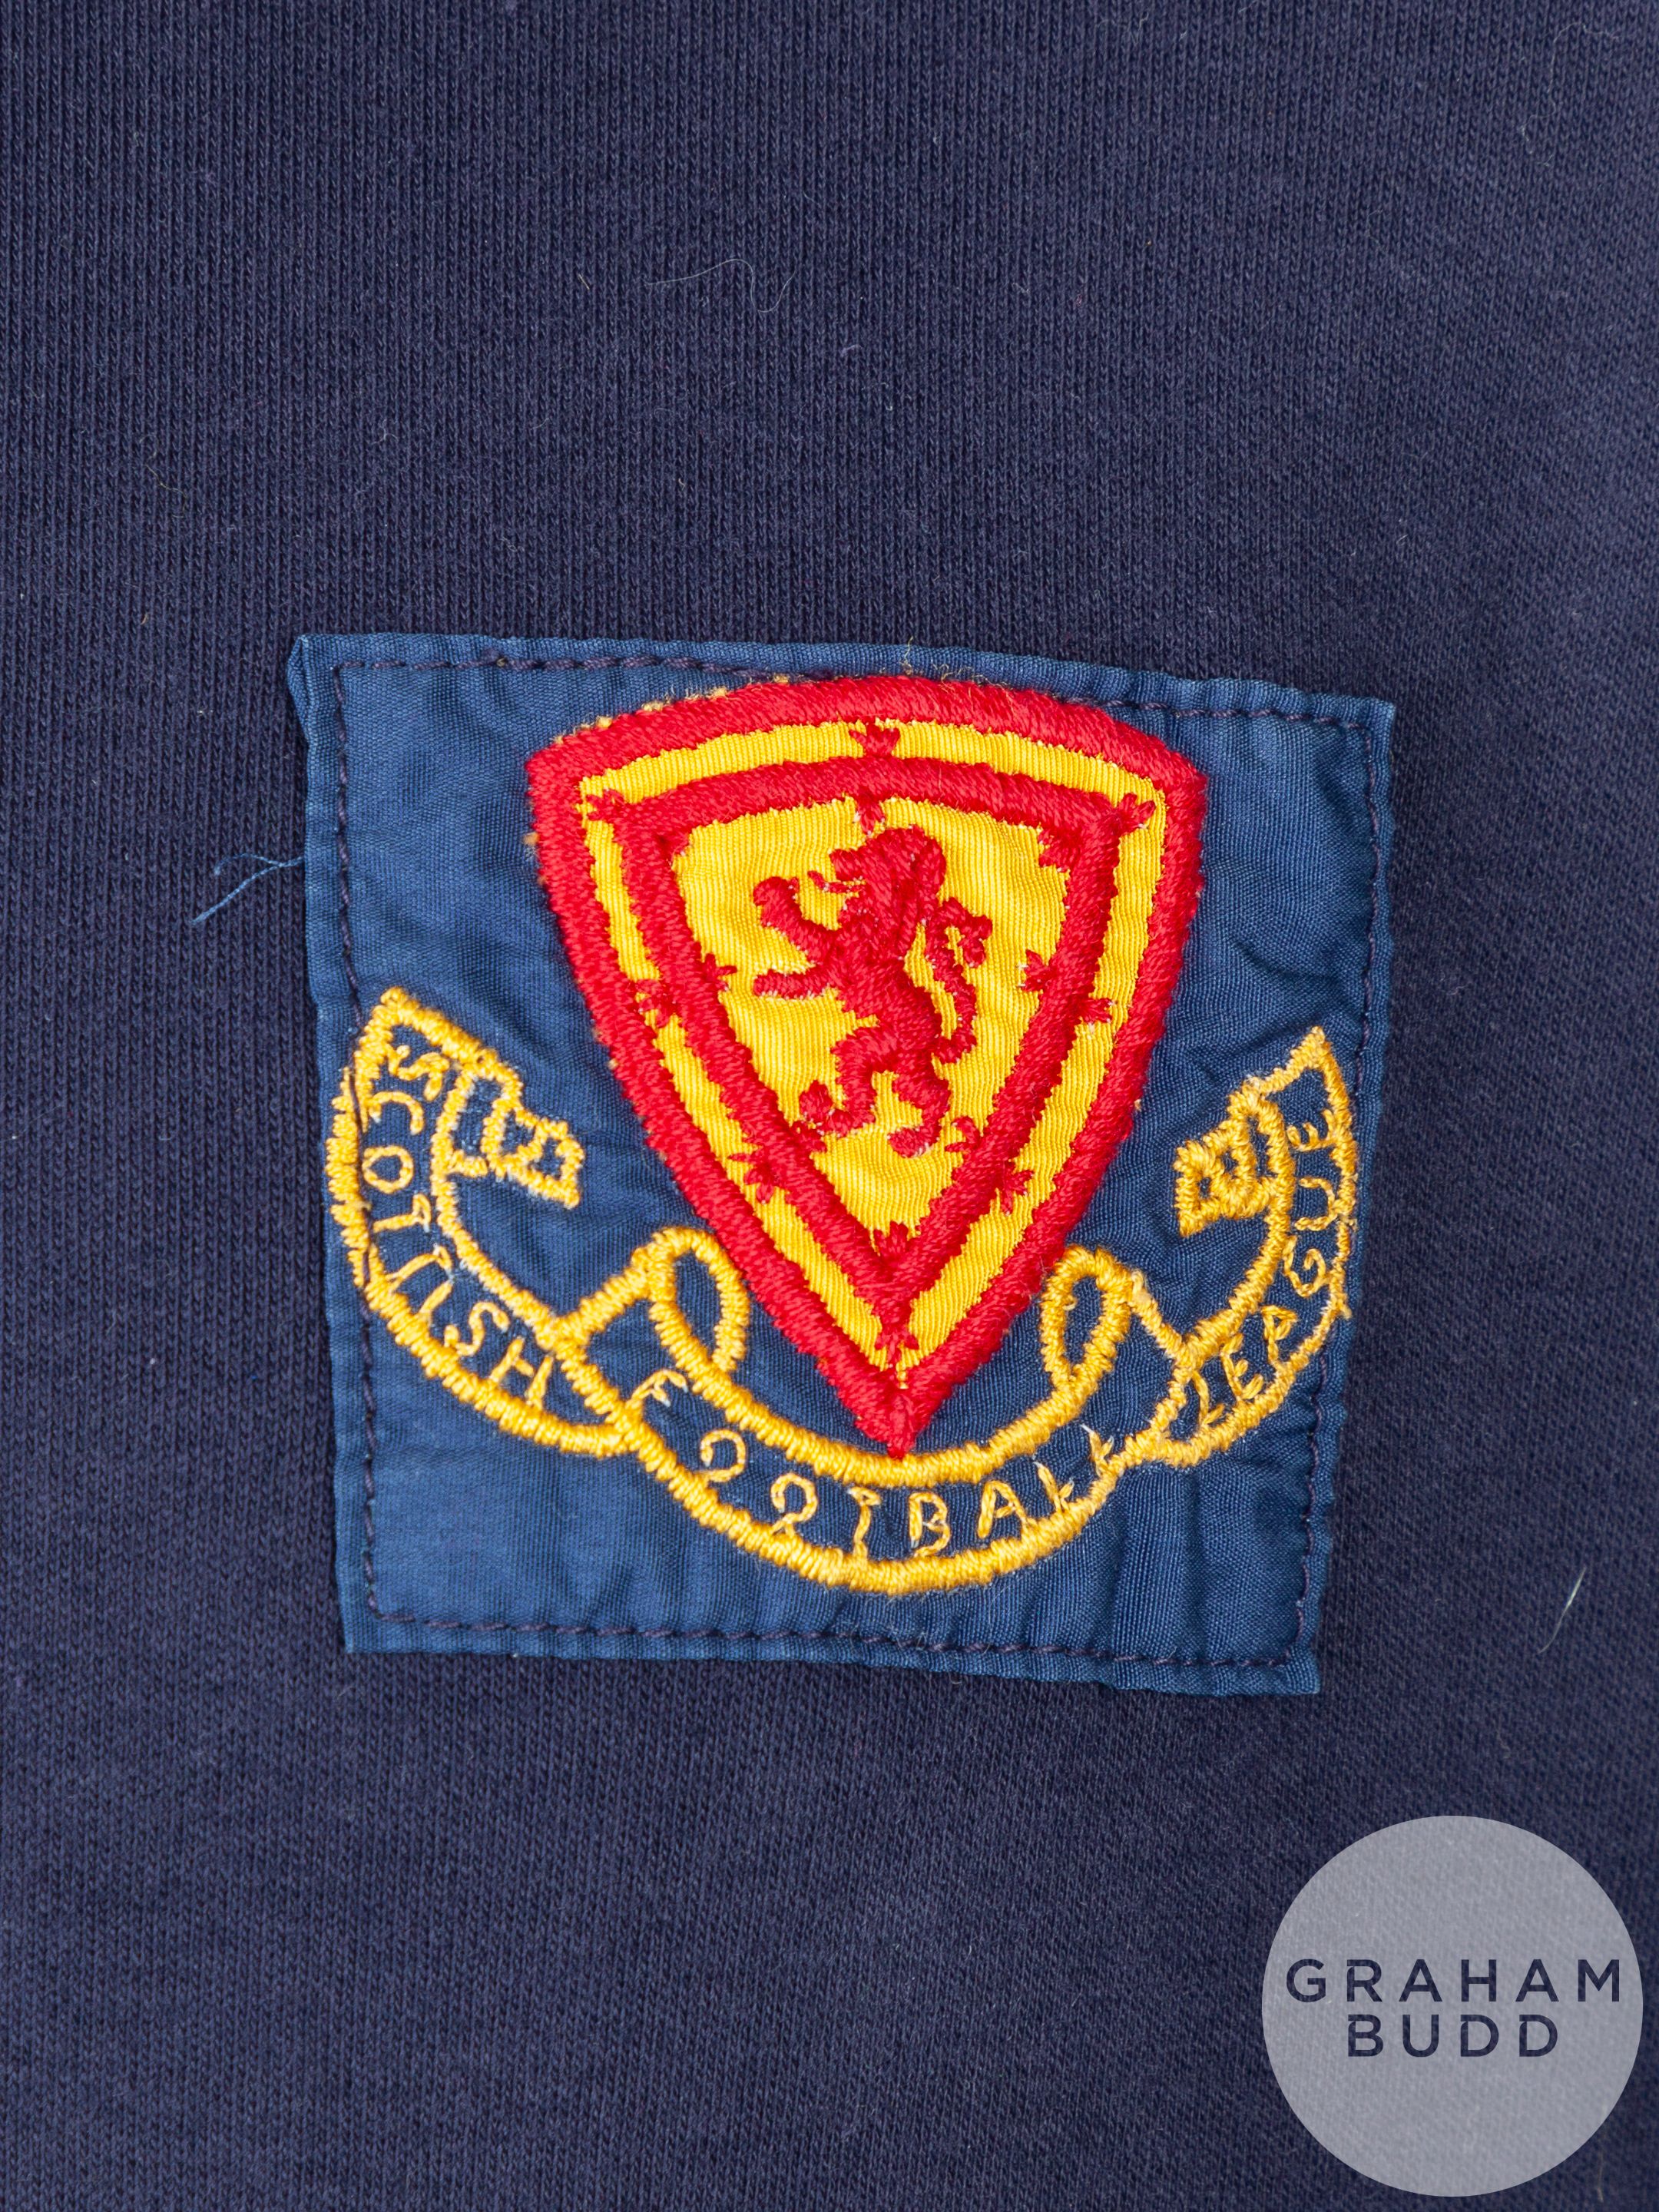 Jim Brogan blue and white No.6 Scottish Football League match worn long-sleeved shirt - Image 3 of 4